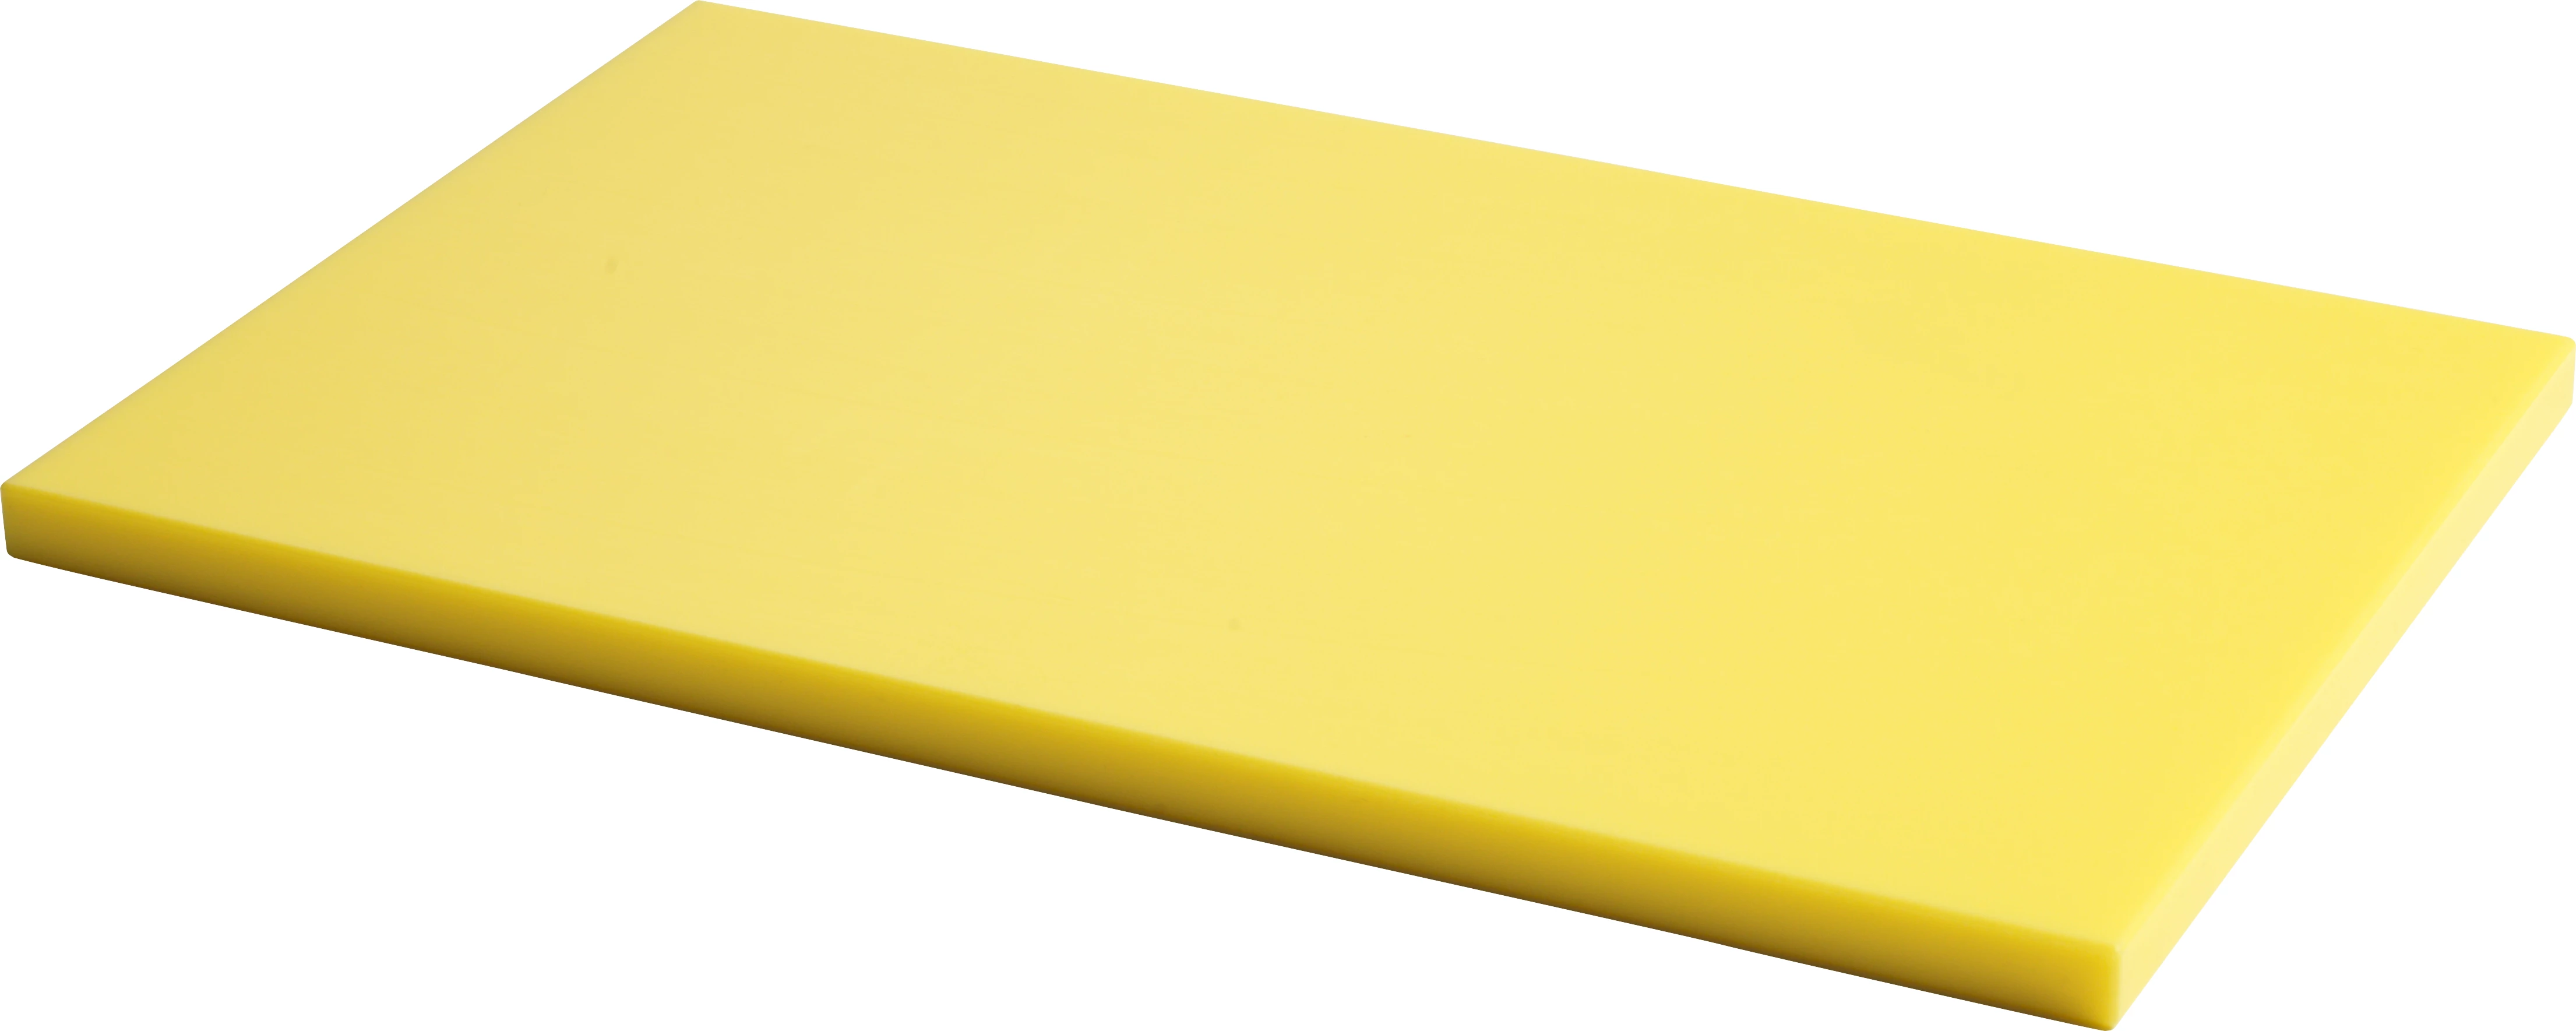 Euroboard skæreplanke, gul, 40 x 25 x 1,5 cm